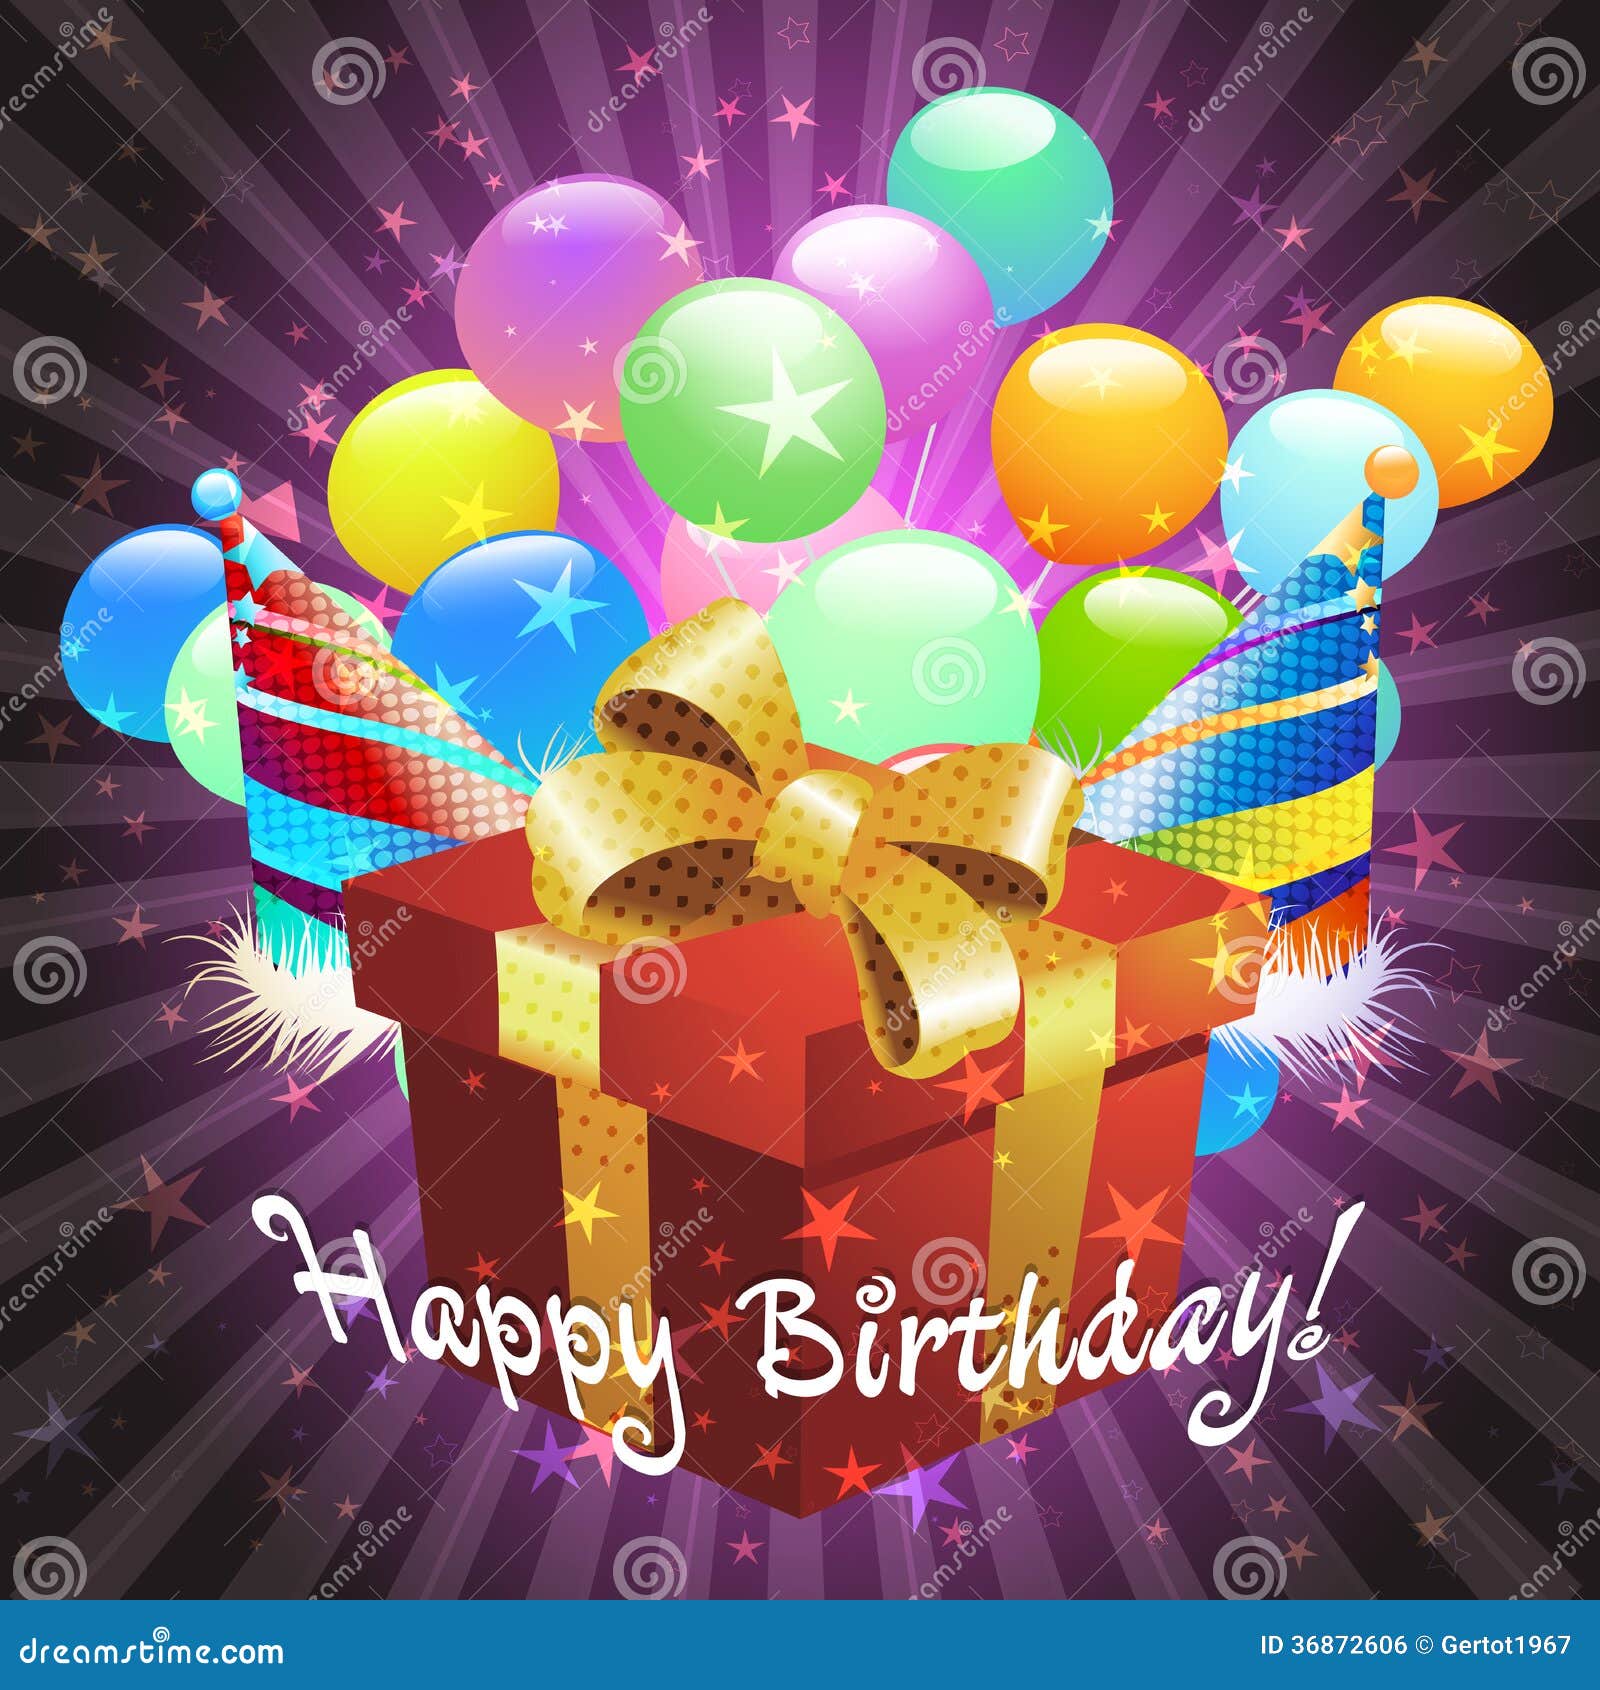 free clipart birthday gift certificate - photo #44